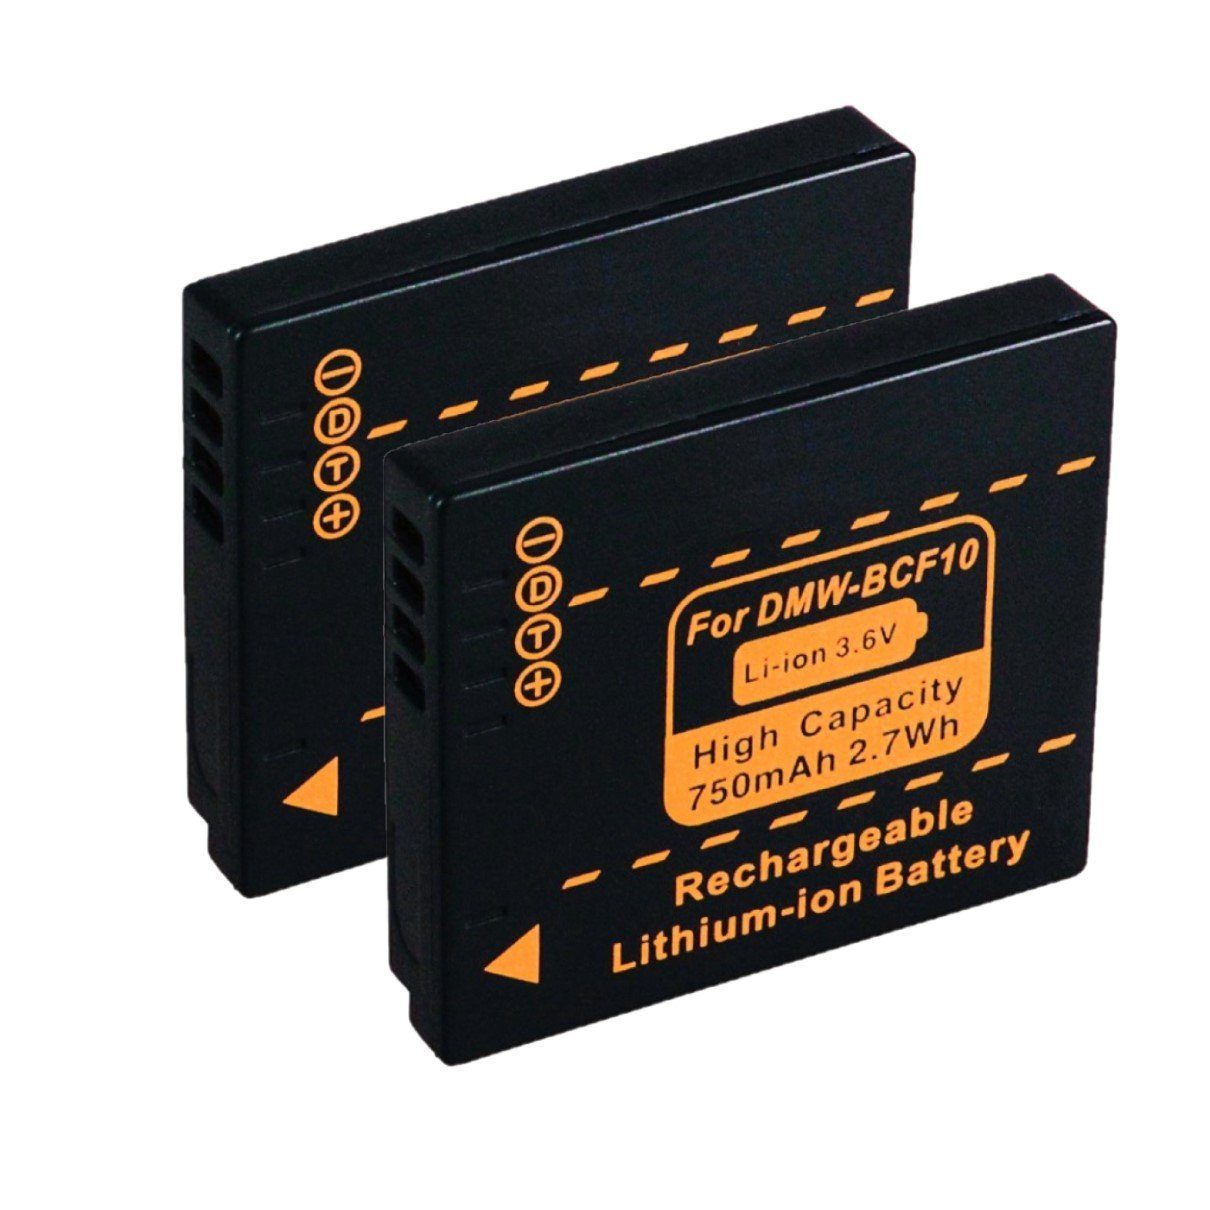 GOLDBATT 2x Akku für Panasonic DMC-FT1 FS7 FS25 FX40 FX550 DMC-FP8 FP8A FP8K DMC-FX60 FX60A FX60S Kamera-Akku Ersatzakku 750 mAh (3,6 V, 2 St), 100% kompatibel mit den Original Akkus durch maßgefertigte Passform inklusive Überhitzungsschutz